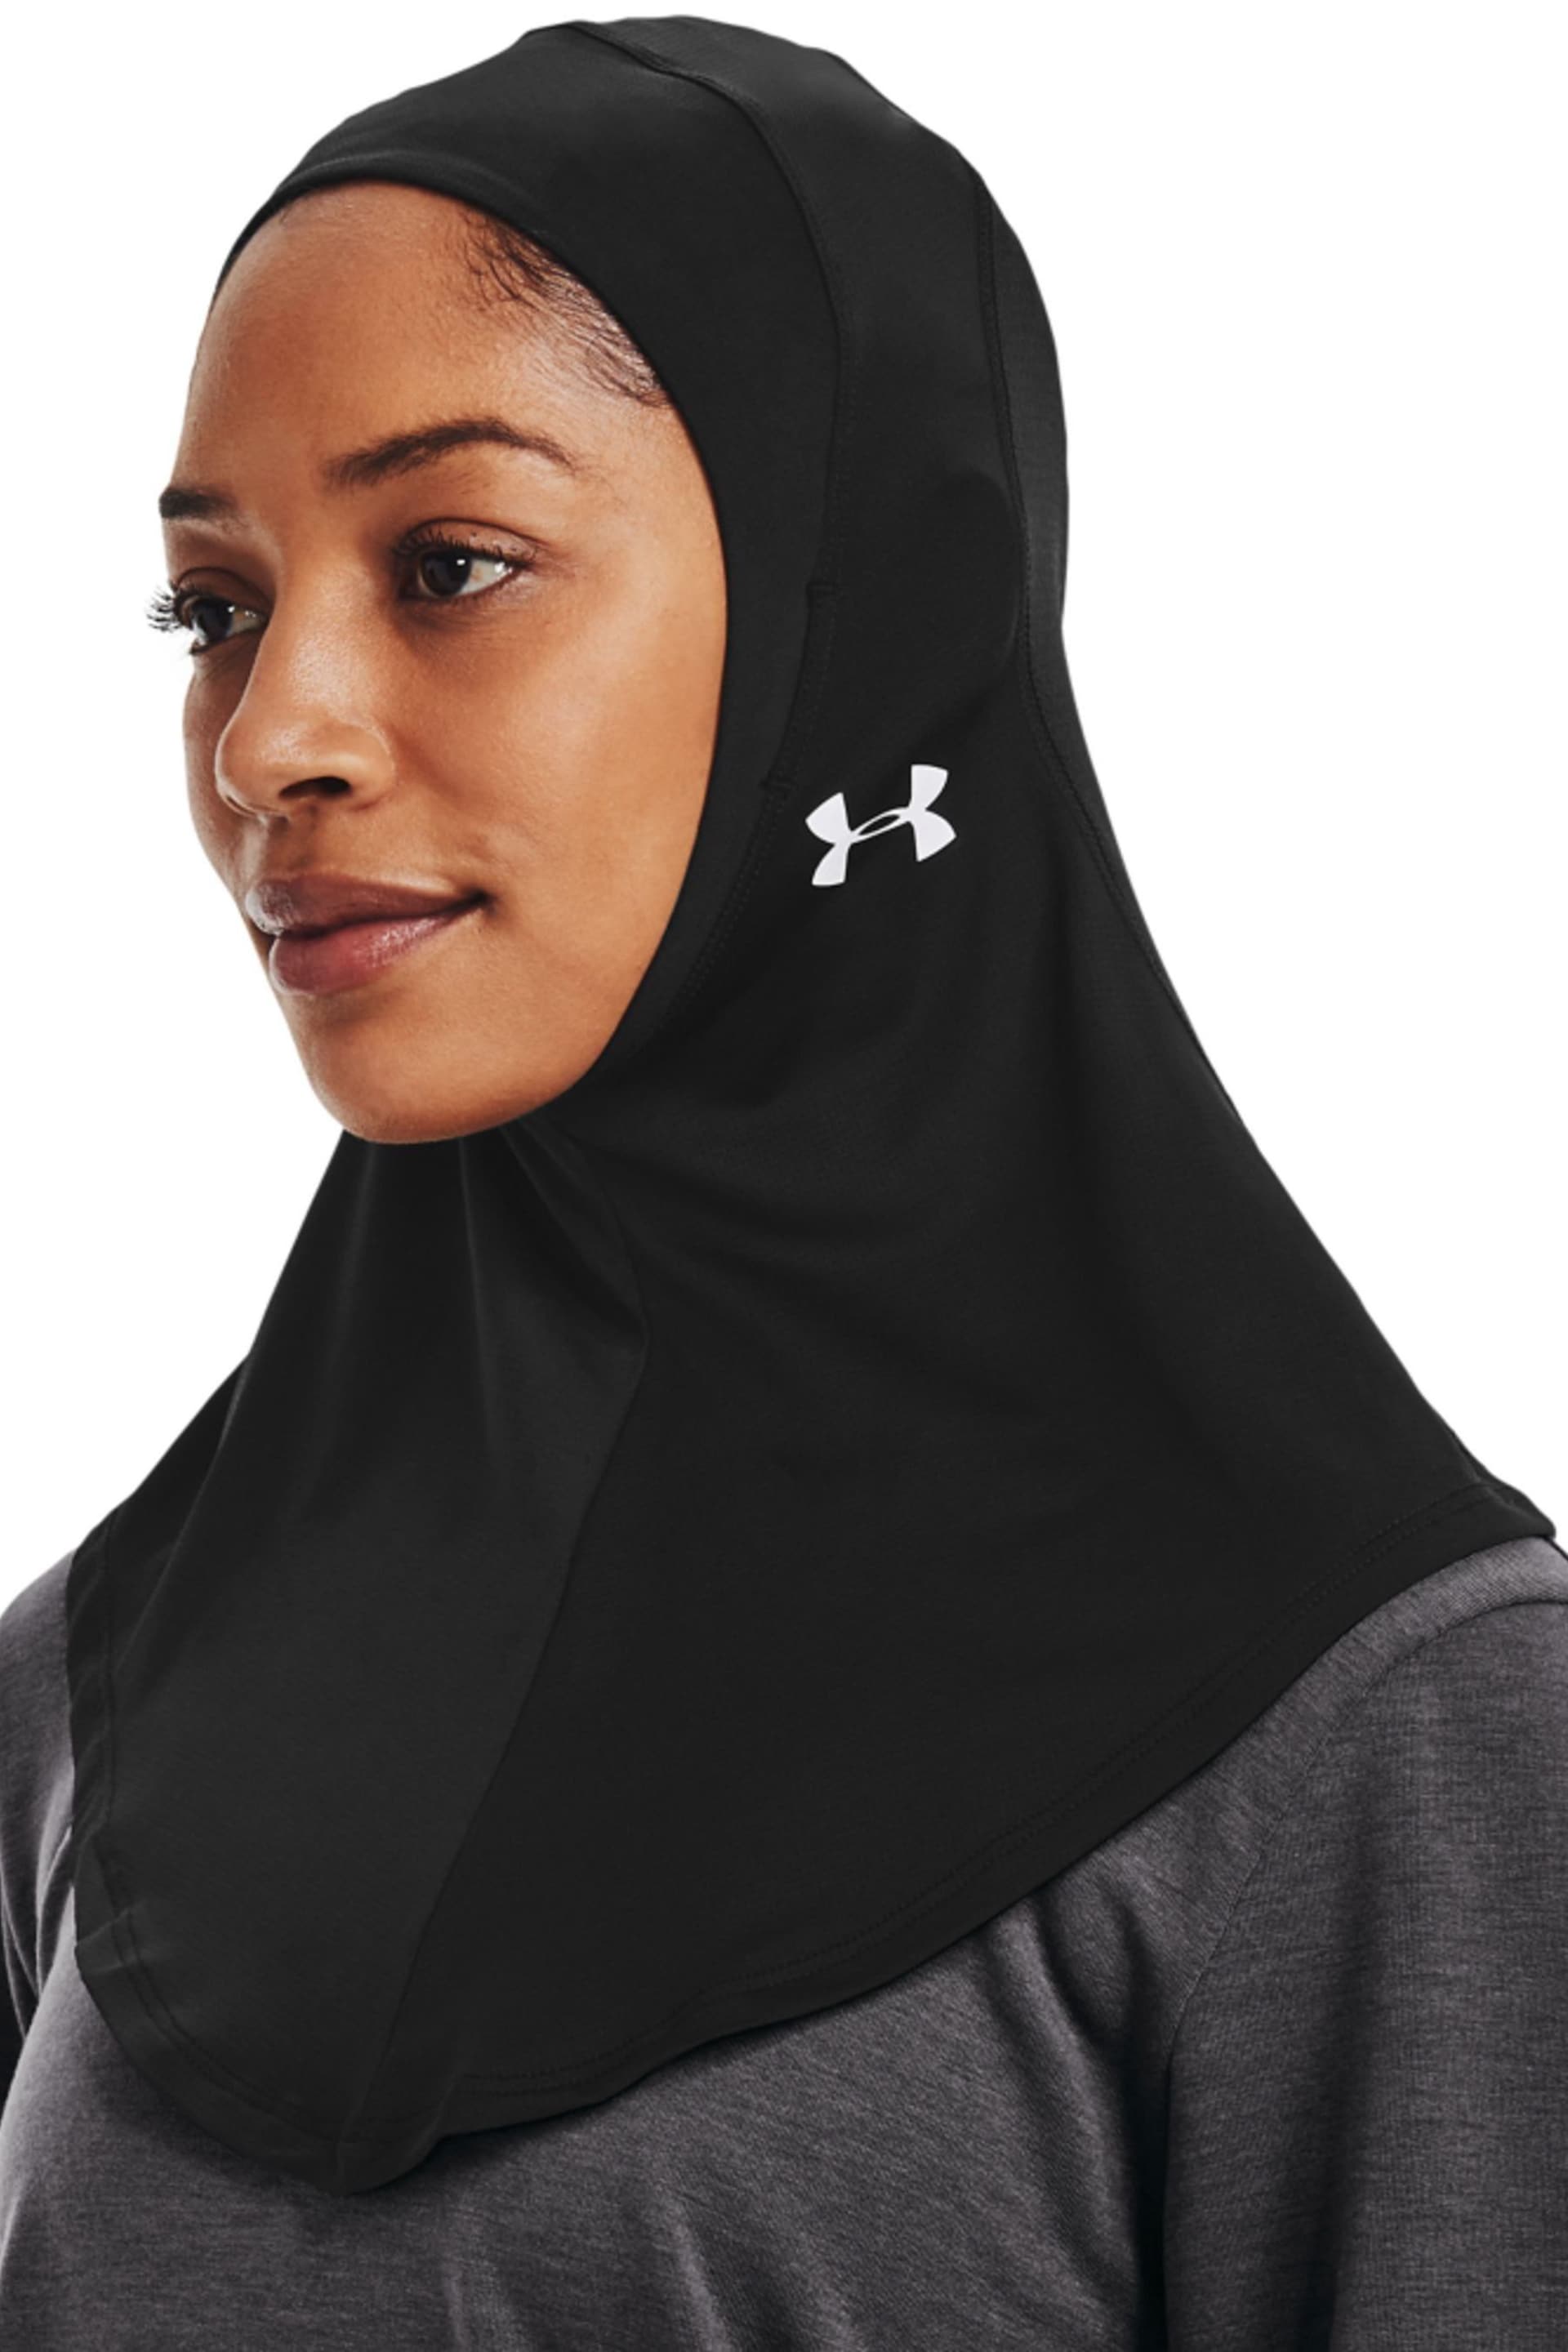 Under Armour Sport Black Hijab - Image 1 of 4